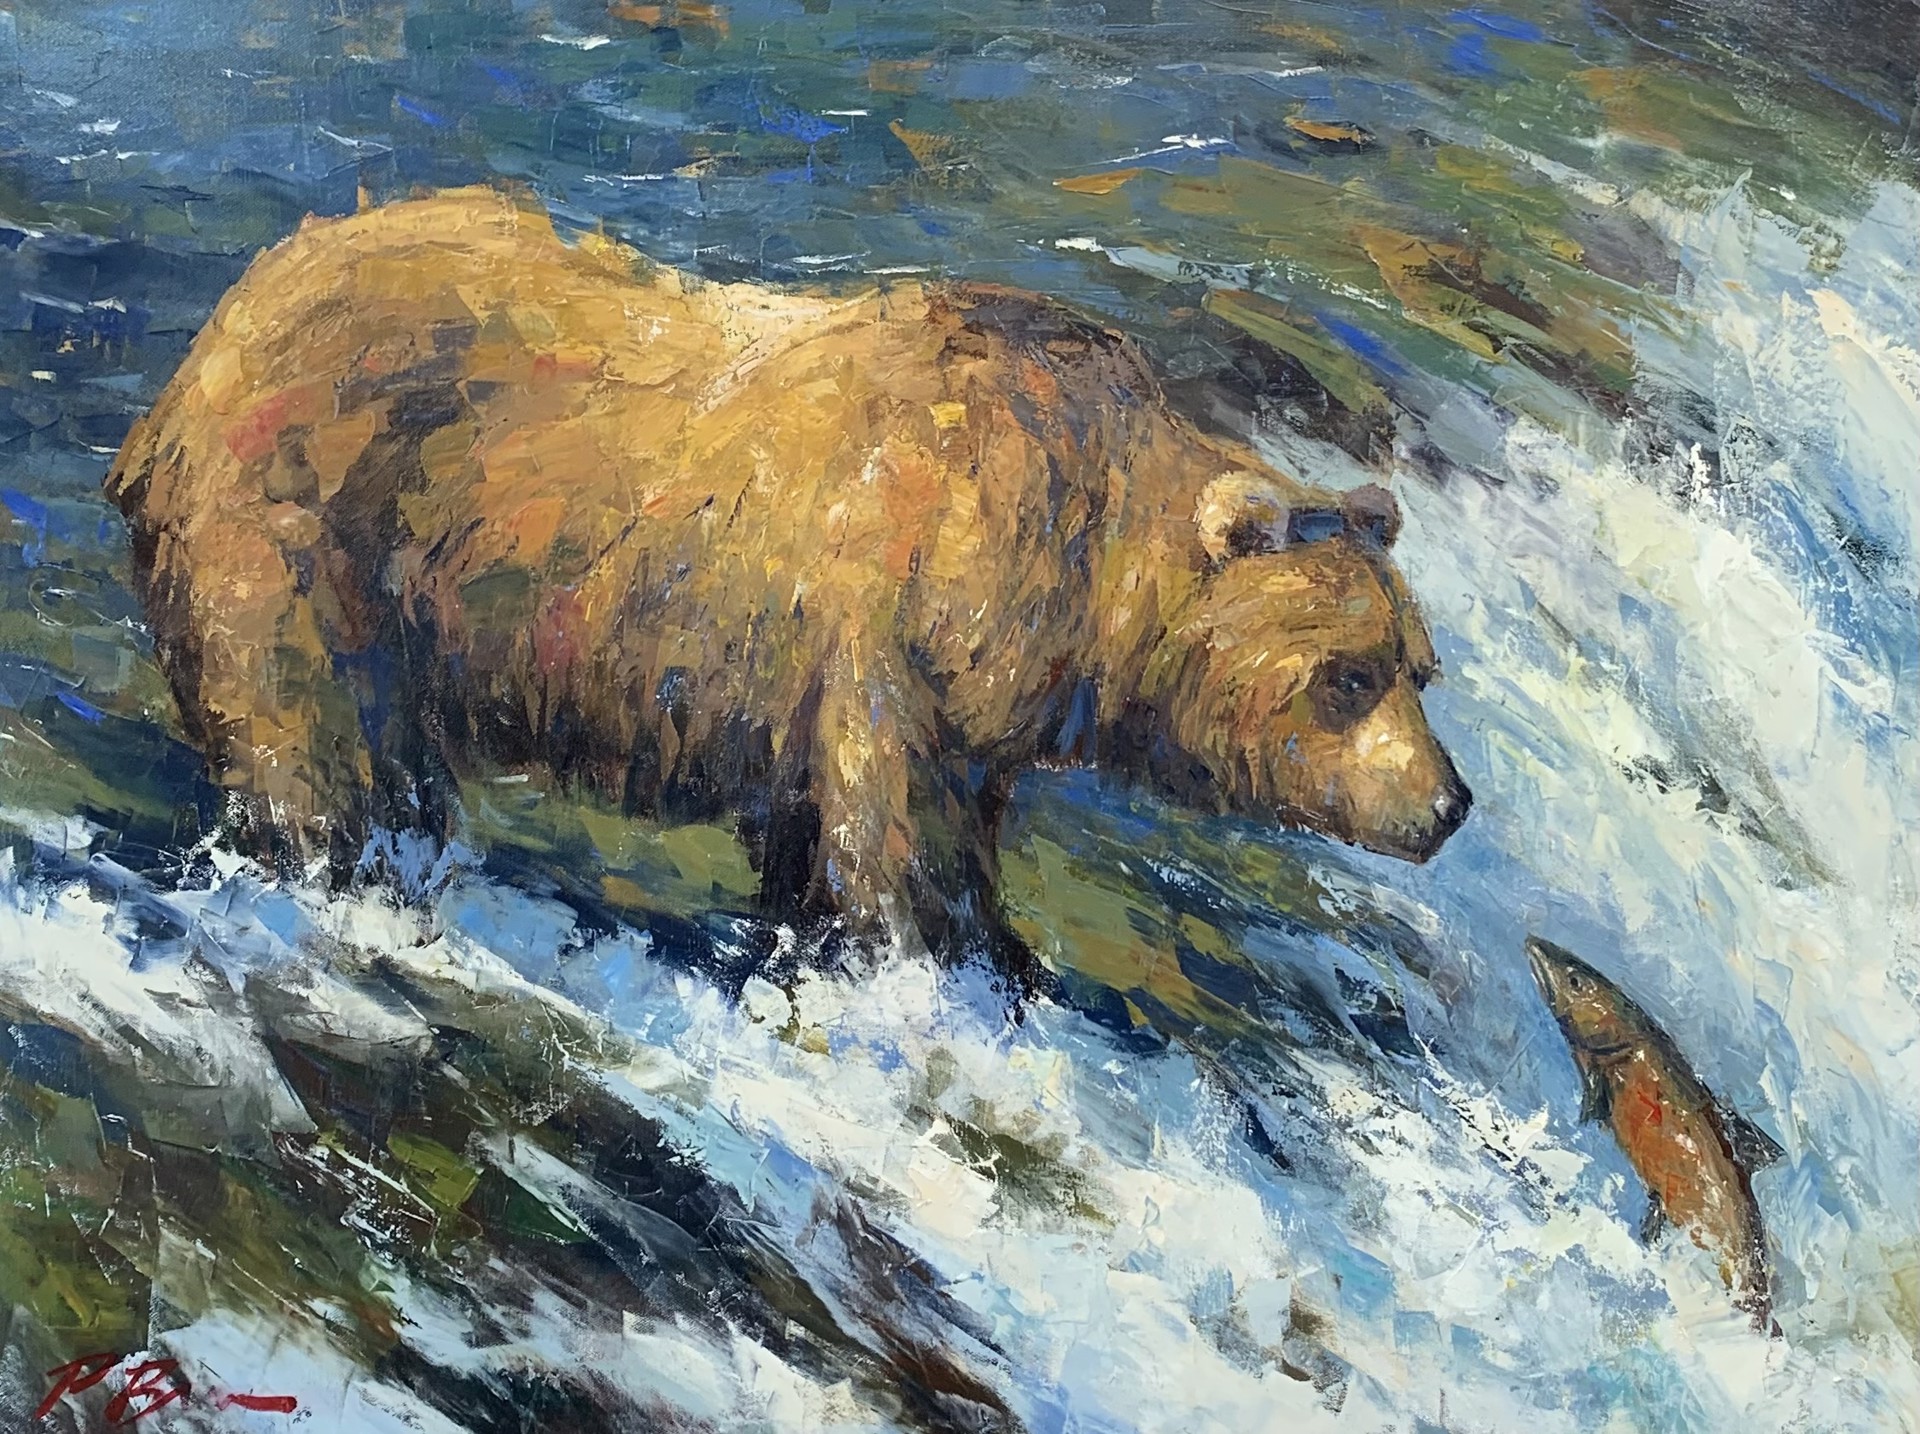 Alaskan Angler by Perry Brown